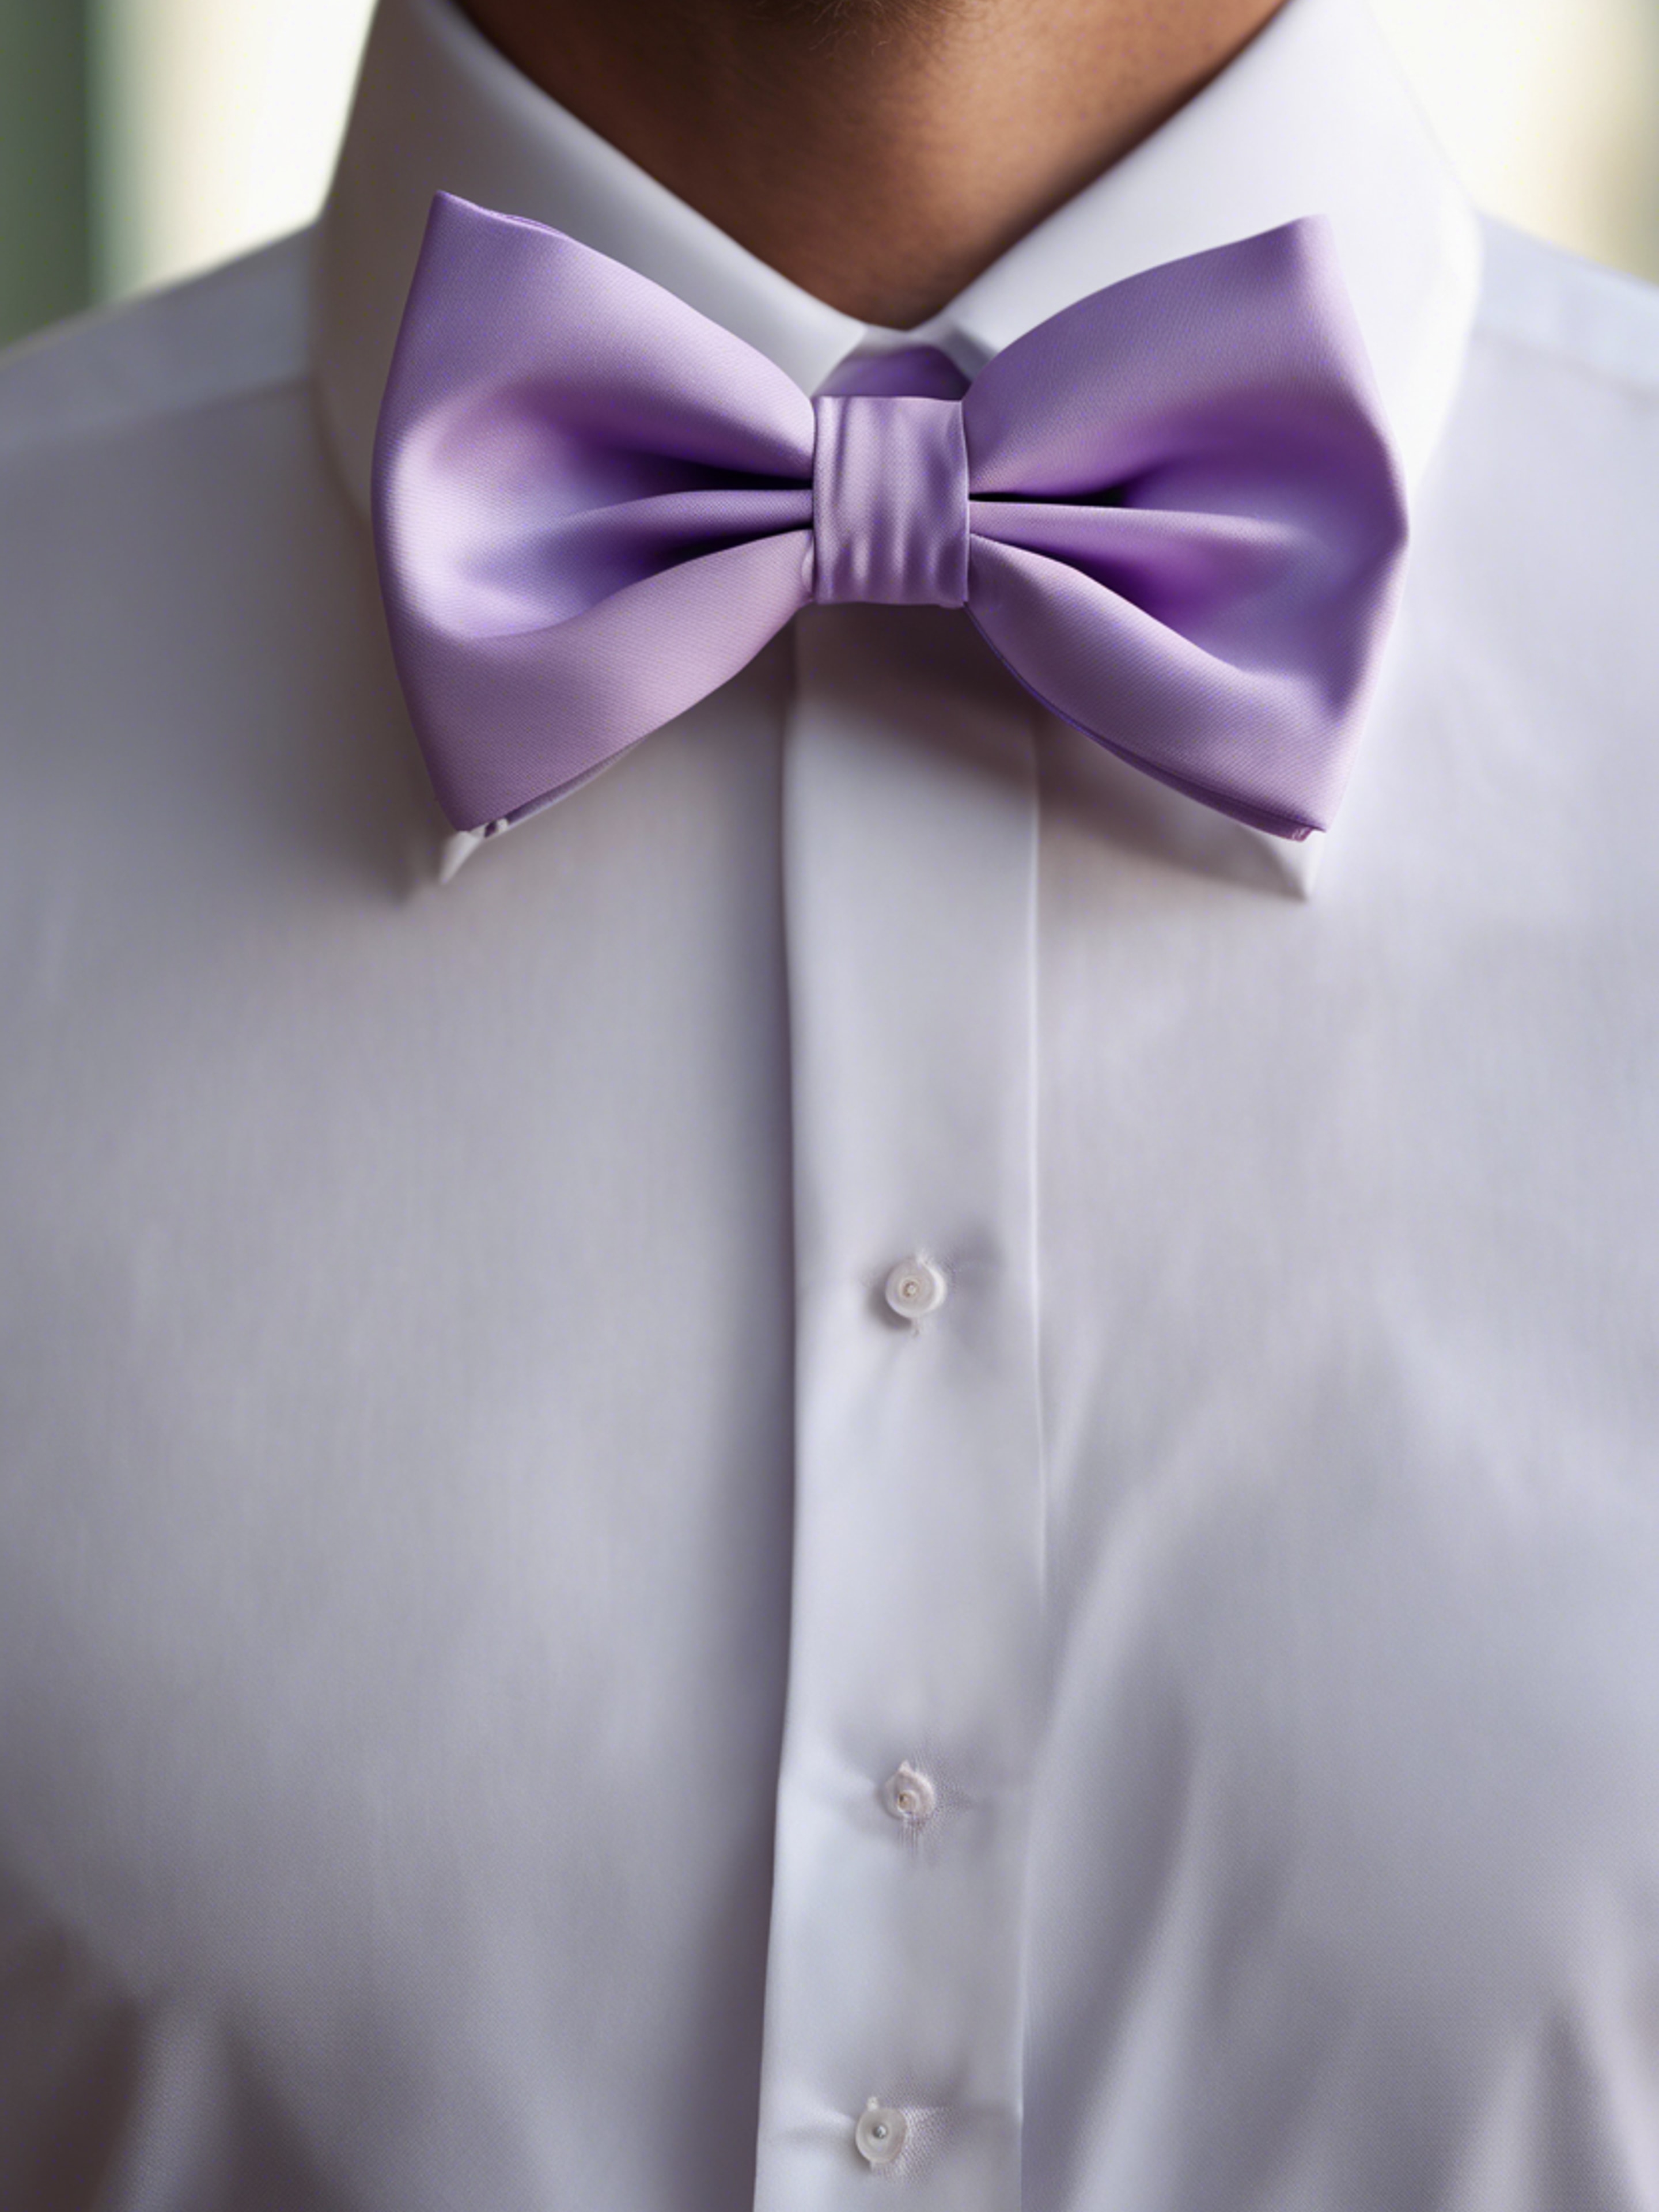 A preppy pastel purple bow tie on a crisp white shirt. Tapeta[5e87c7412f5947d28f4c]